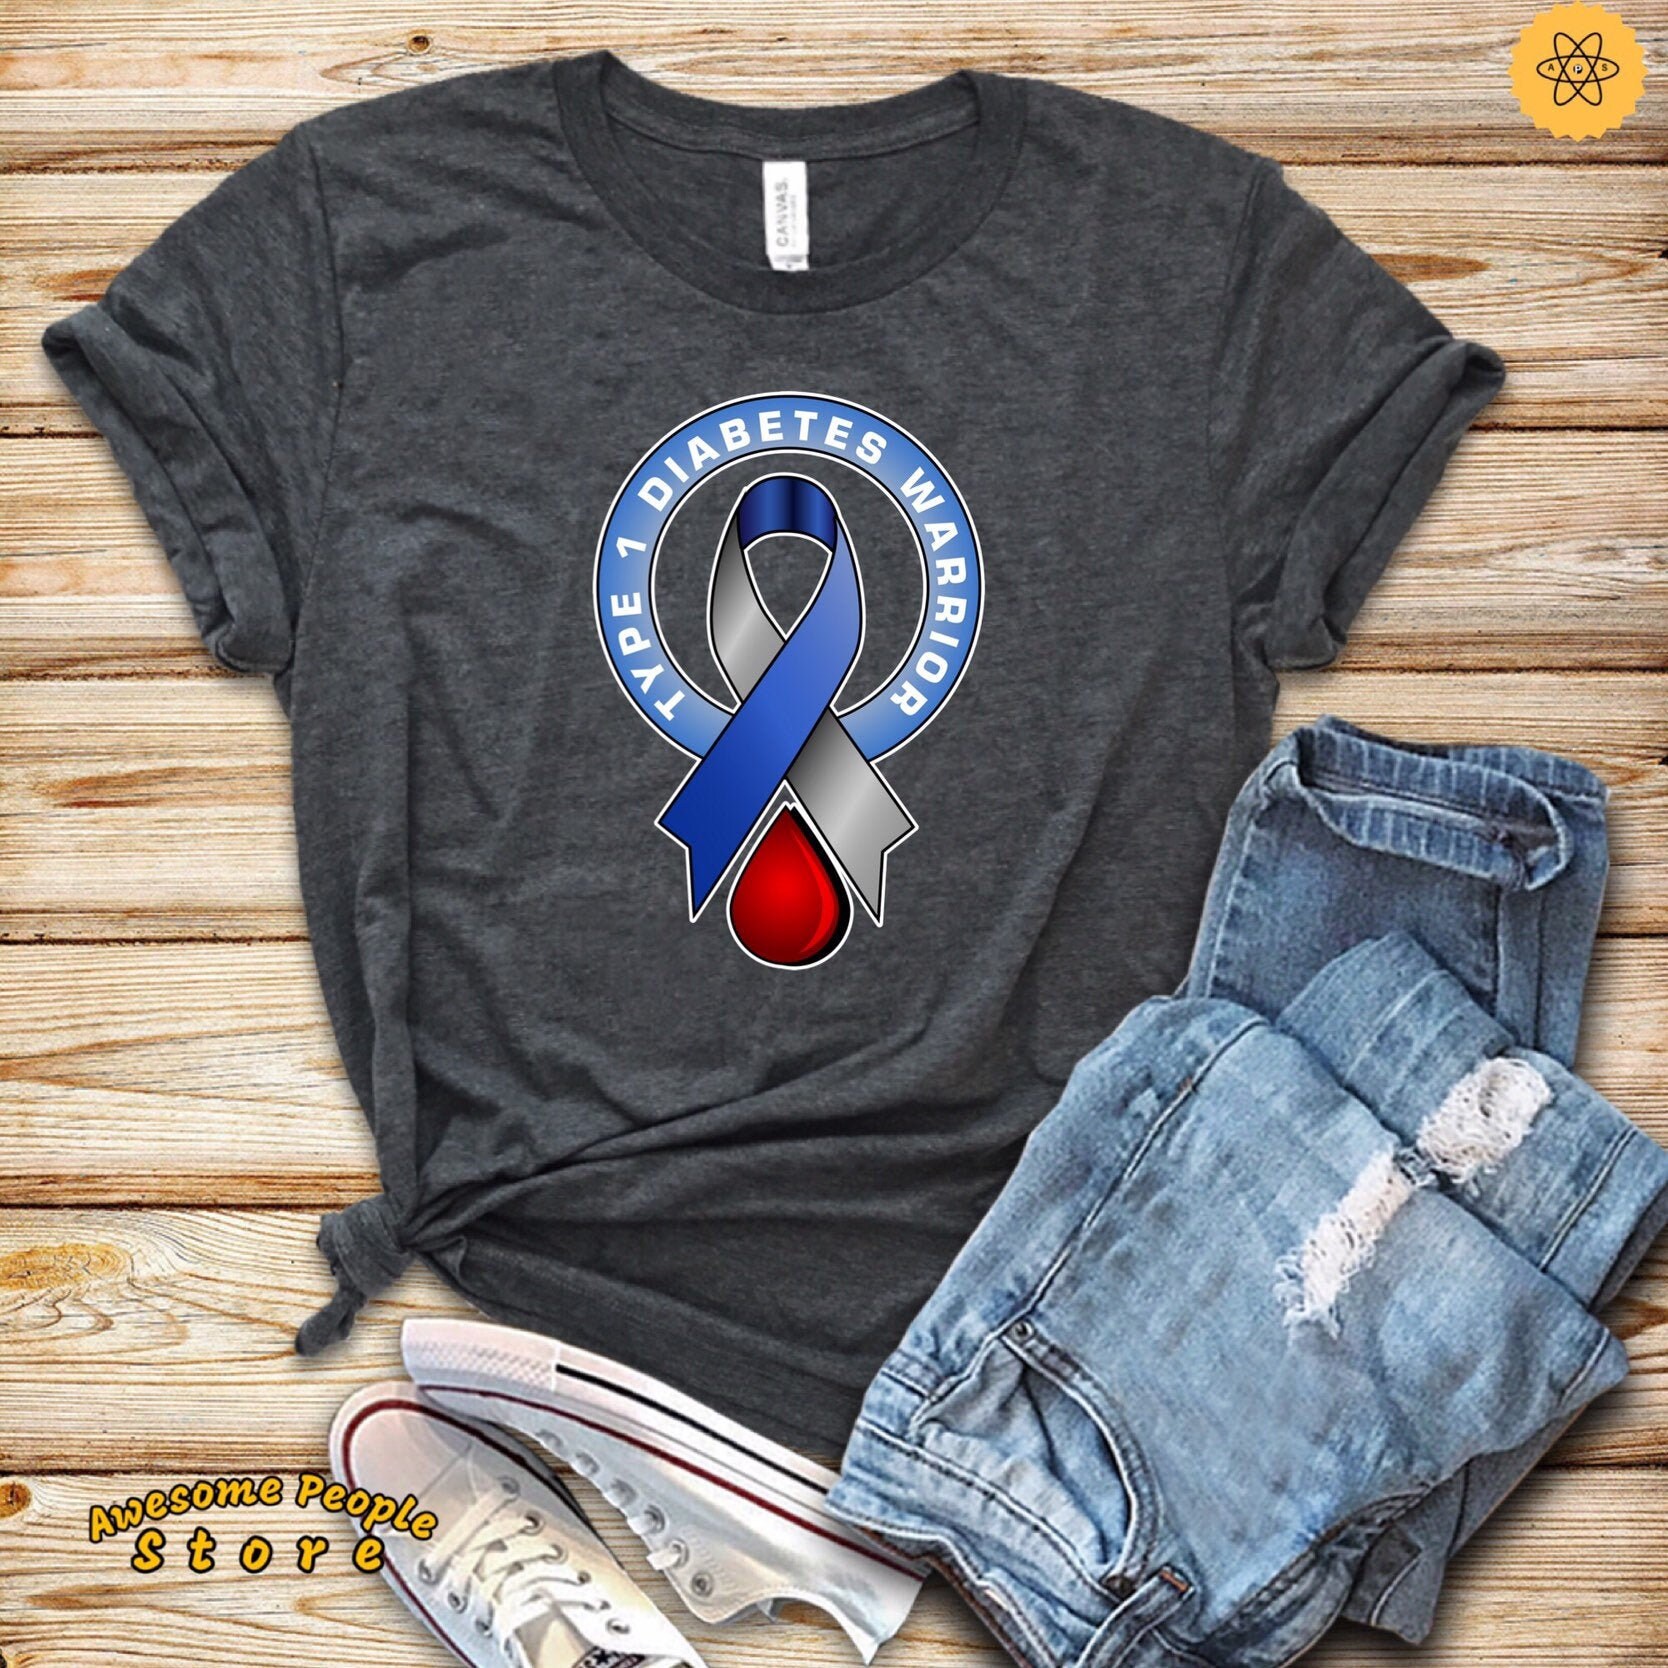 T1D Warrior, Diabetes Shirt, T1D Shirts, Diabetes Awareness, Type 1 ...